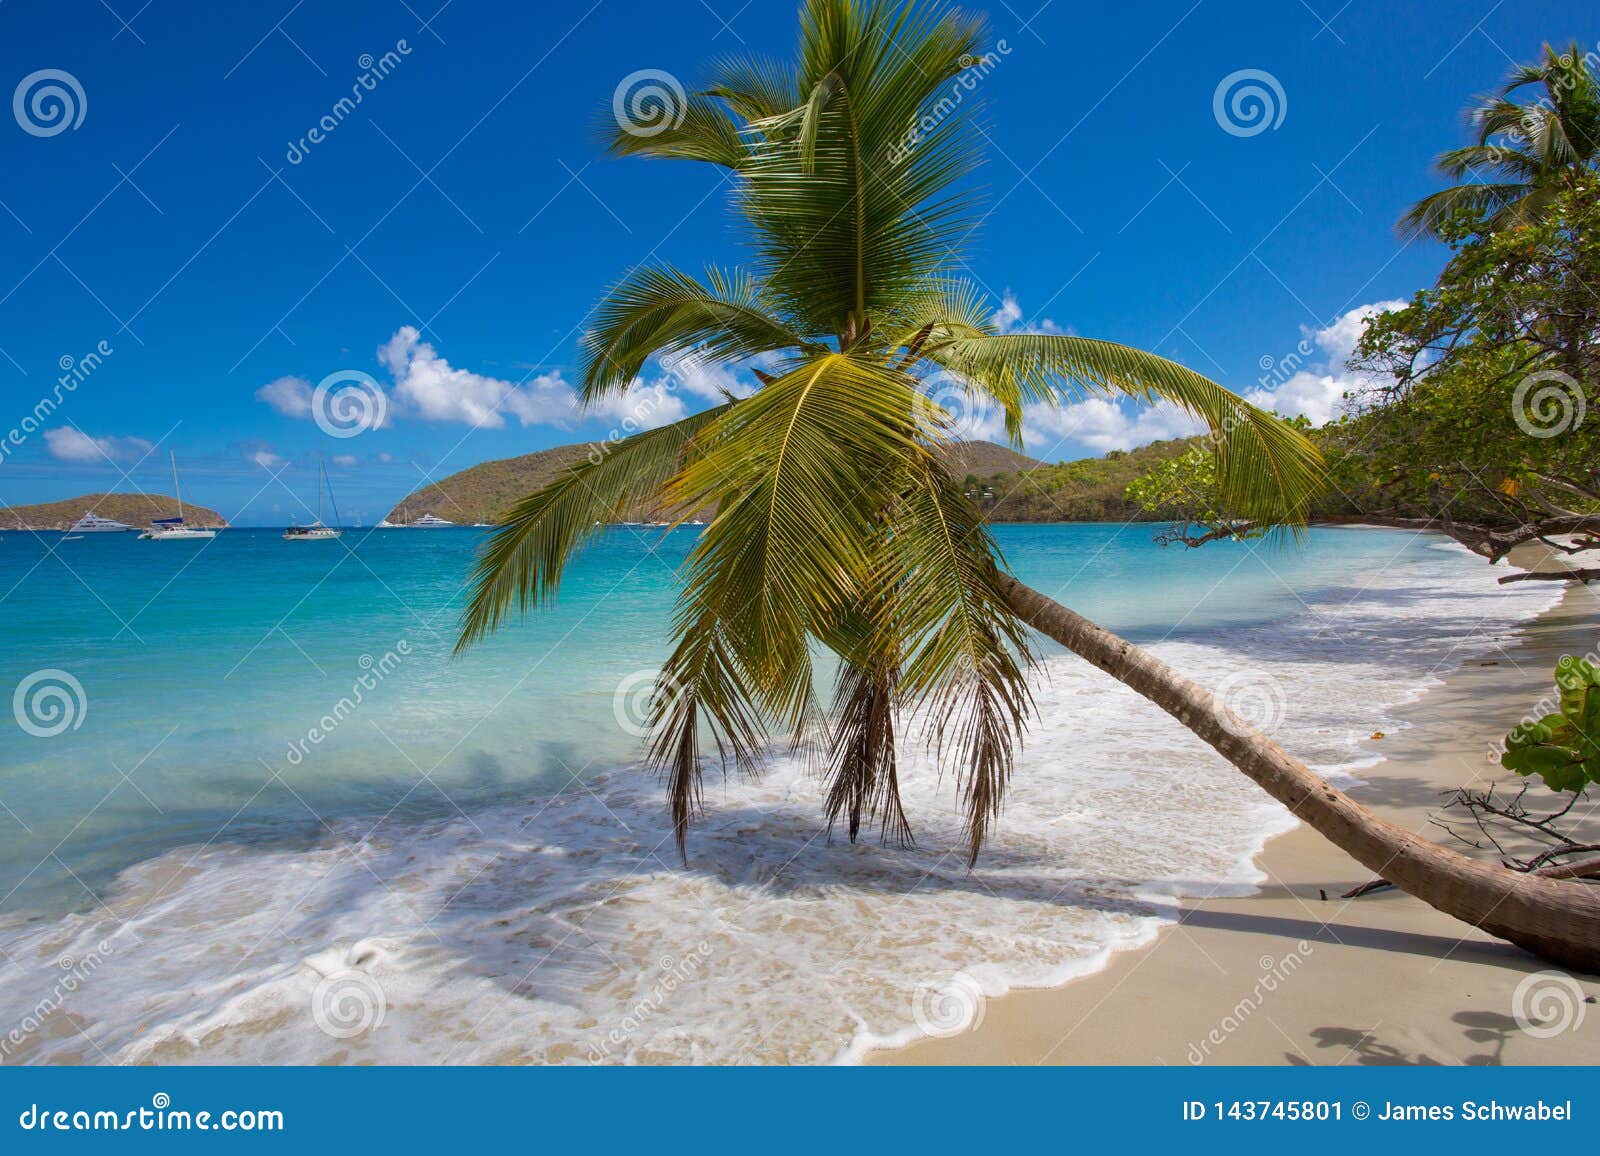 palm trees maho beach on st john in the us virgin islands